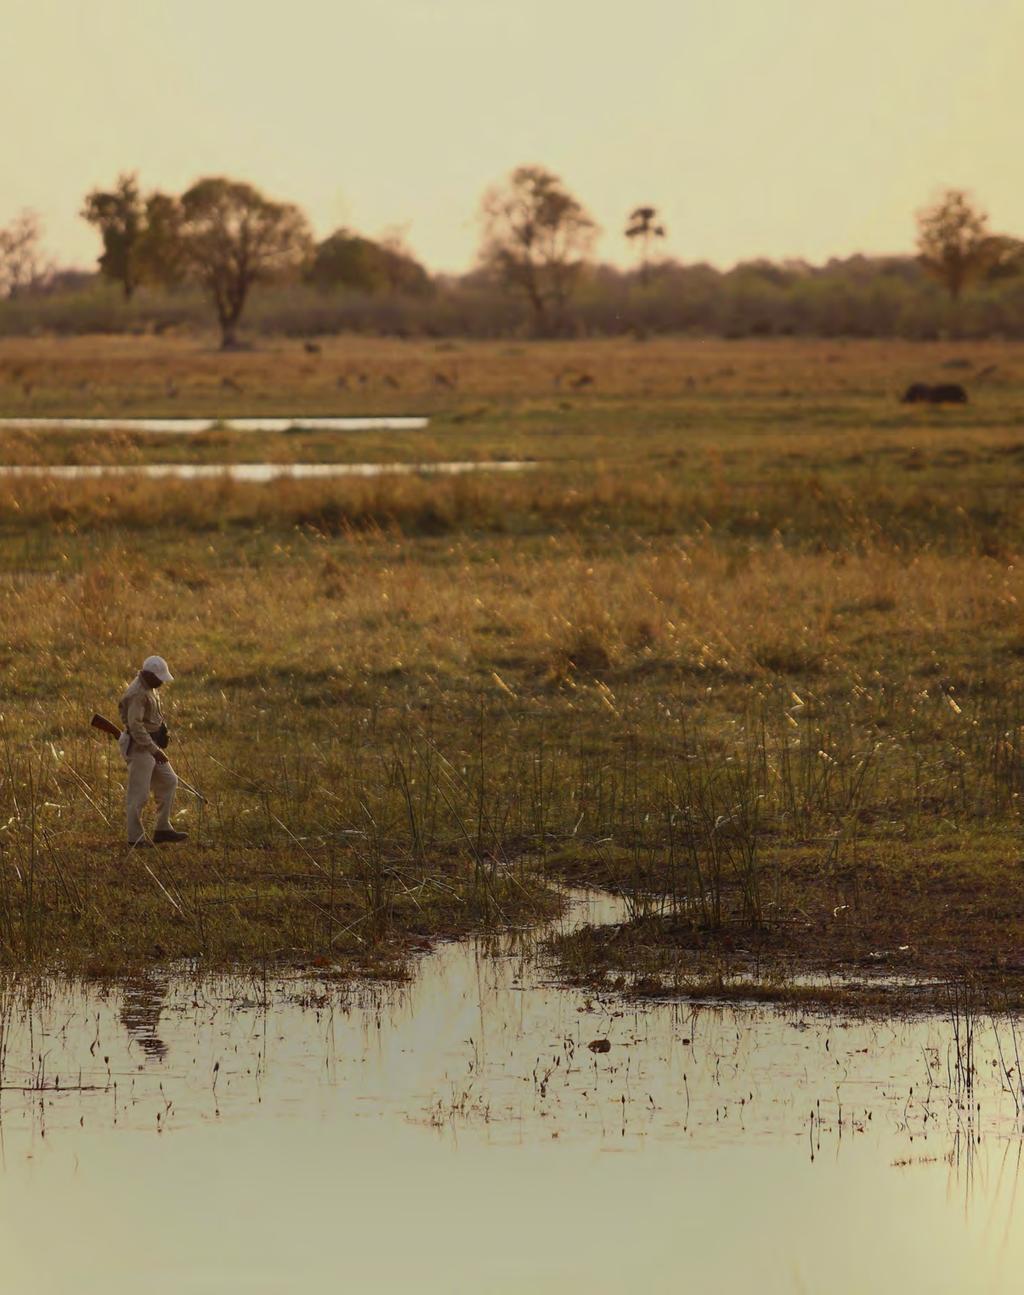 DAYS 4-6 SANDIBE OKAVANGO LODGE OKAVANGO DELTA DAYS 4-6 Sandibe Okavango Lodge Okavango Delta Stevie Mann/Sandibe Okavango Safari Lodge/&Beyond Get your checklist ready African wild dog, Baboon,